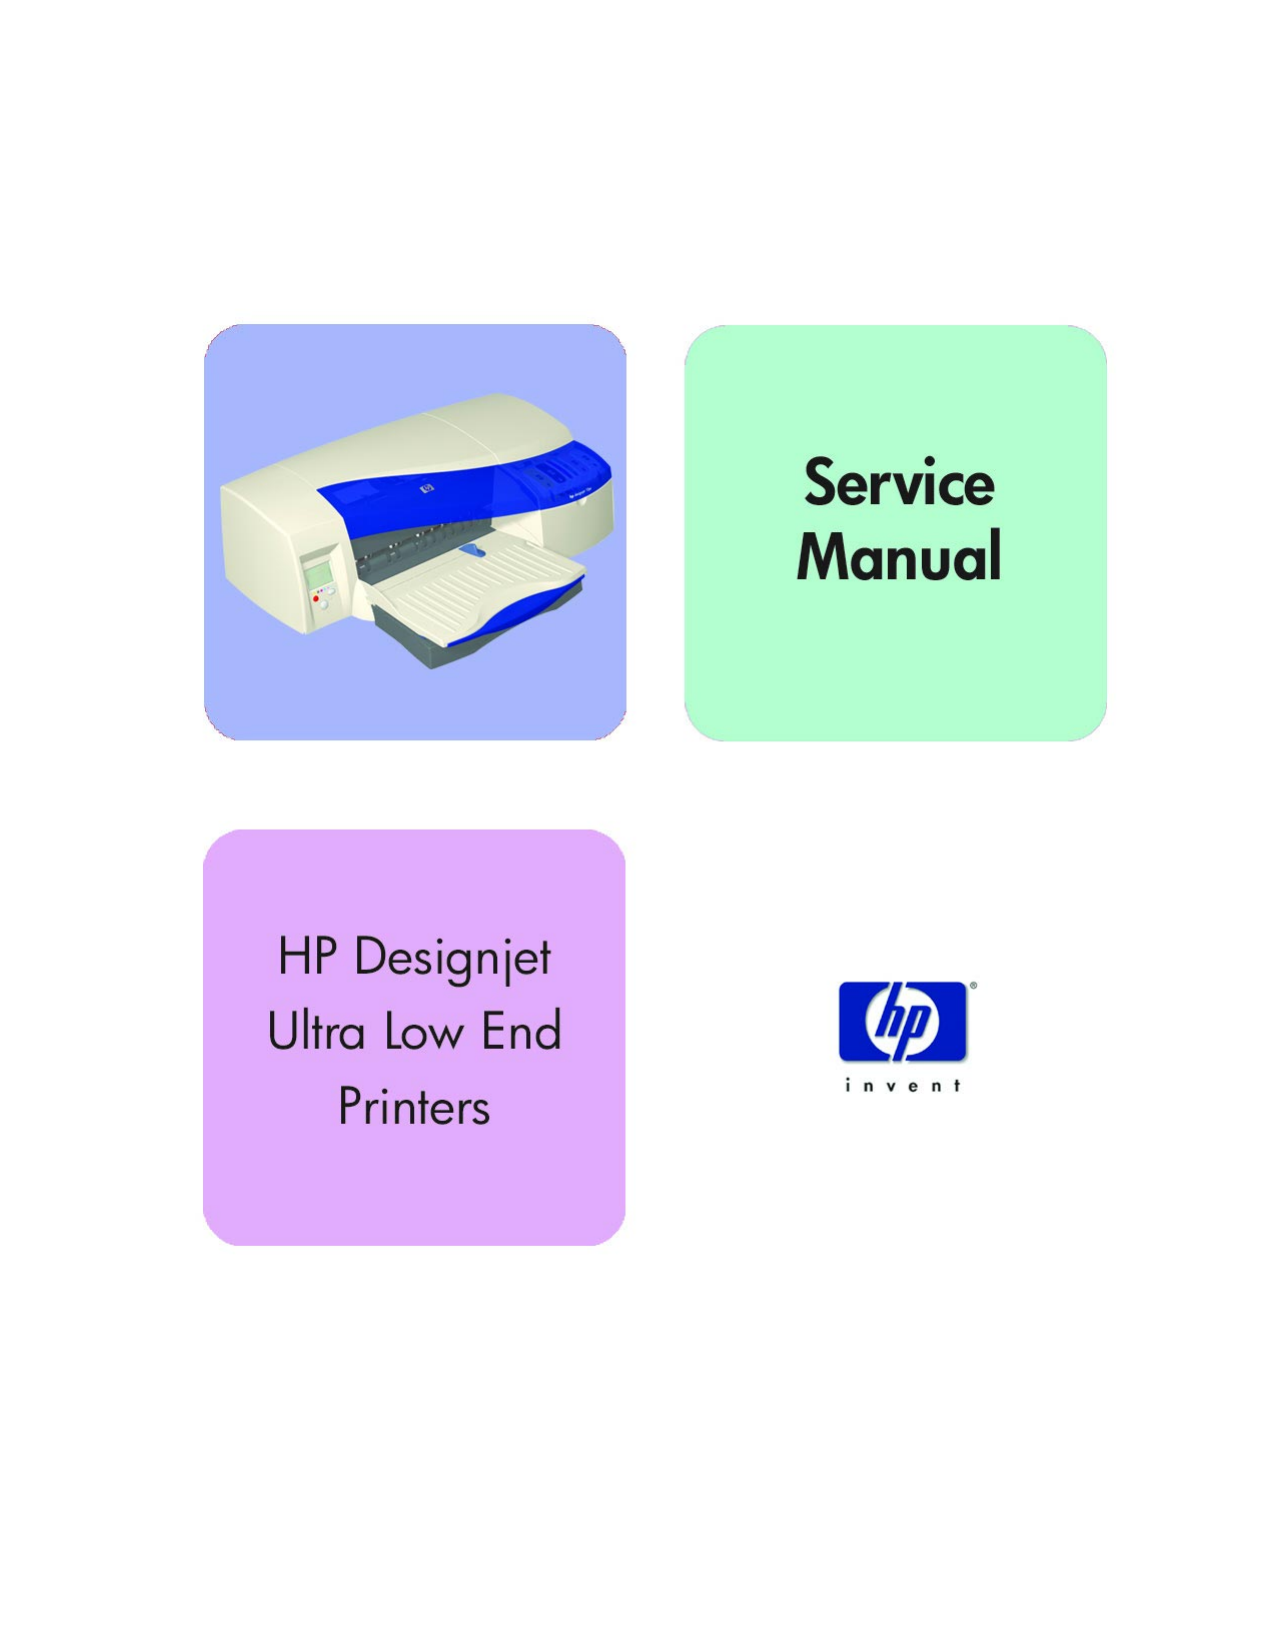 HP Designjet 10 ps, 20 ps, 30, 30 n, 50 ps, 70, 90, 100, 100+, 110+nr, 120, 120 nr, 130, 130nr manual Preview image 1